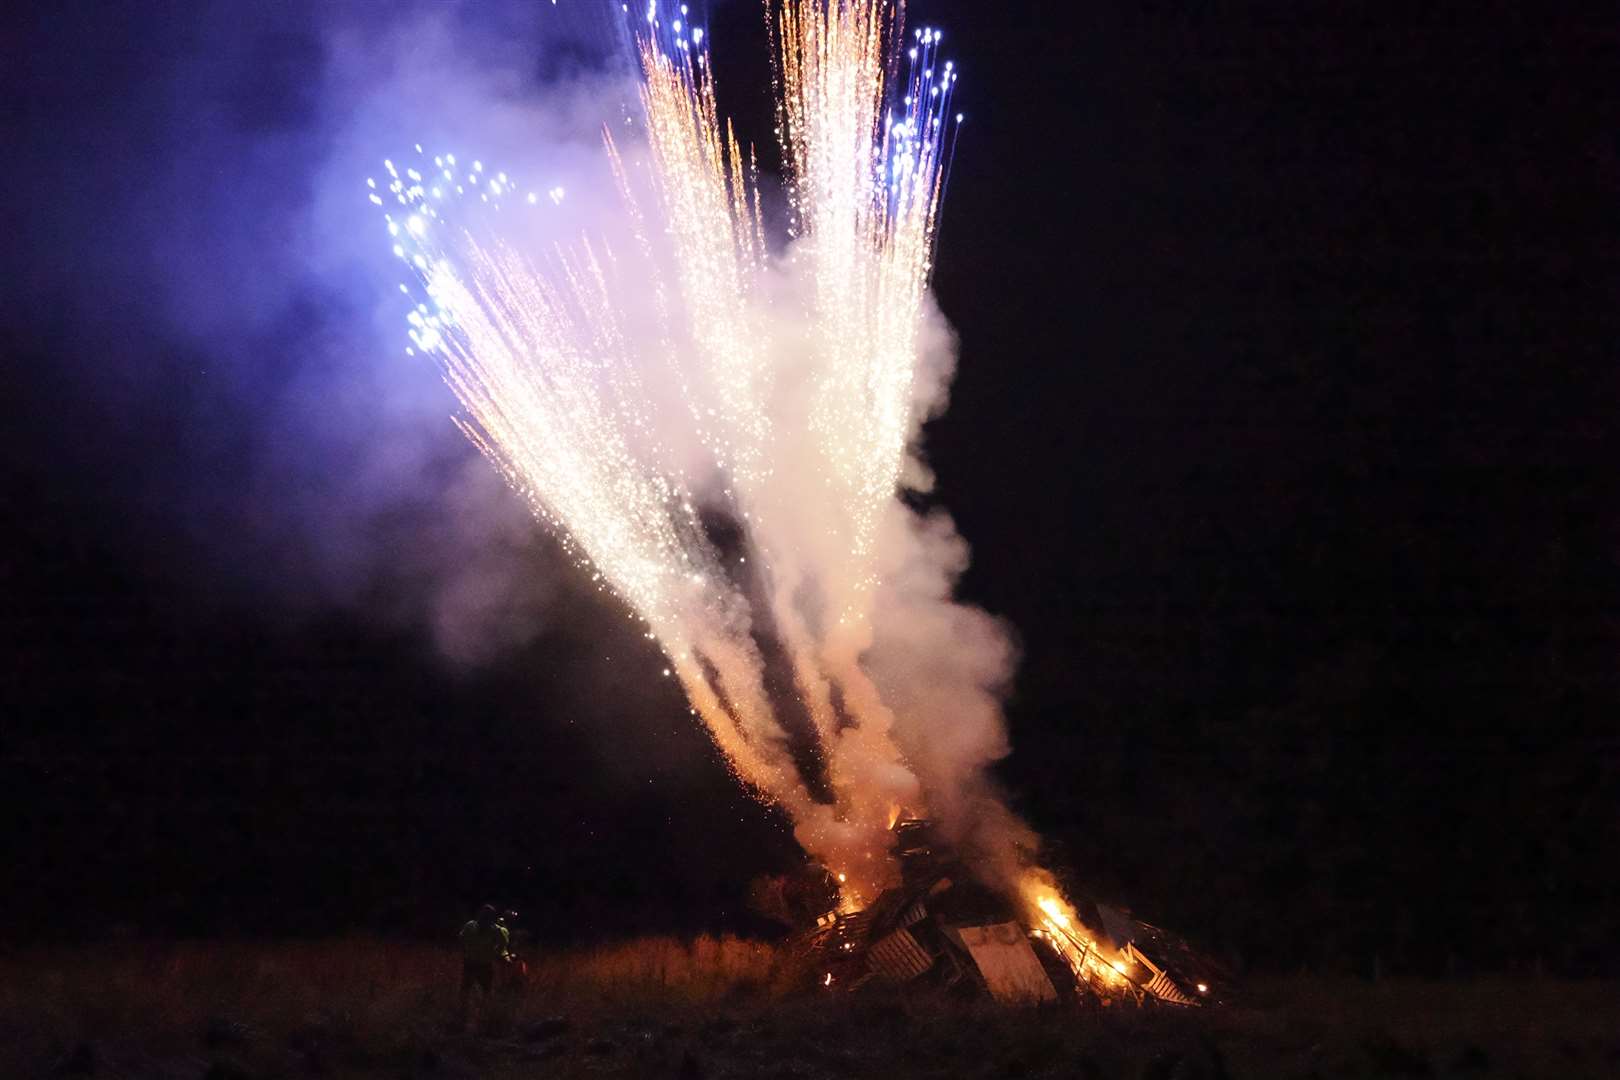 Around £1700 was raised towards next year's bonfire night. Photo: Peter Wild